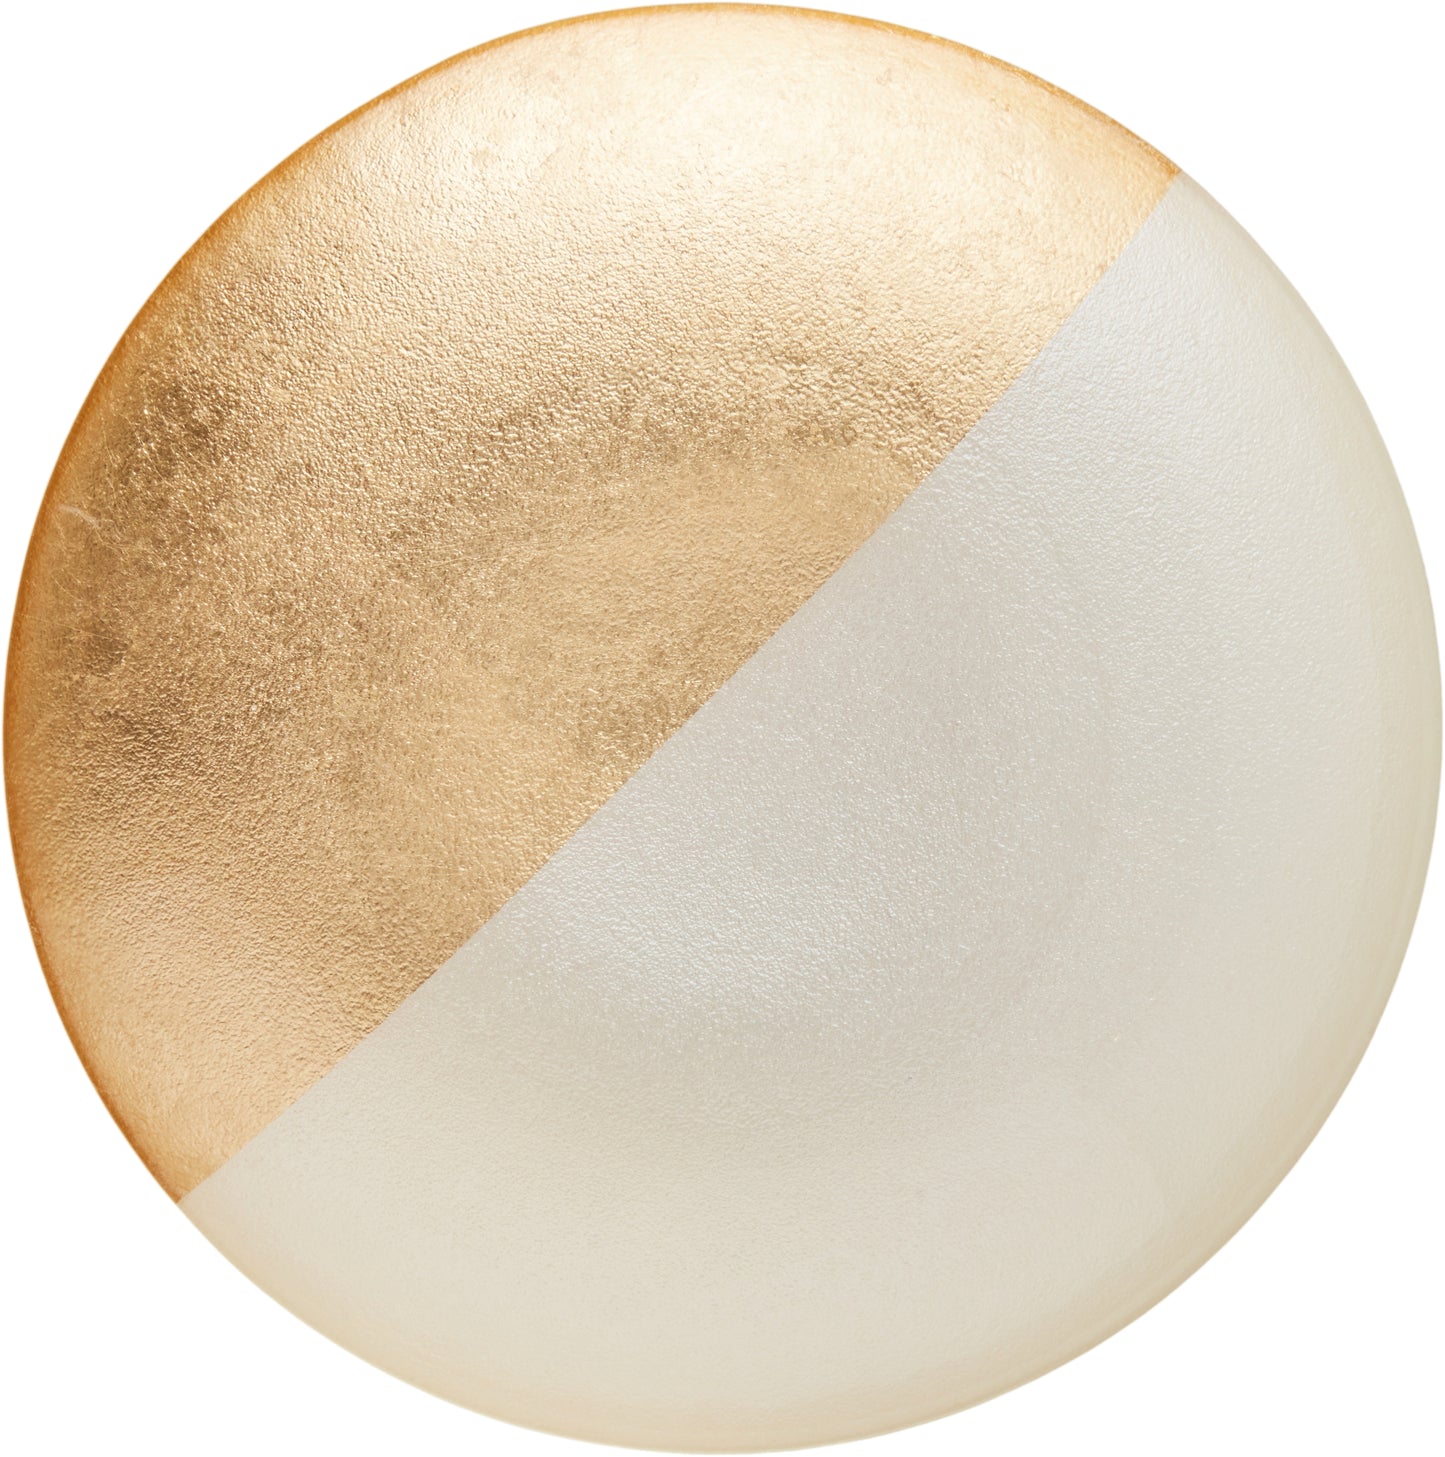 Anton Studio Designs White and Gold Fusion Bowl